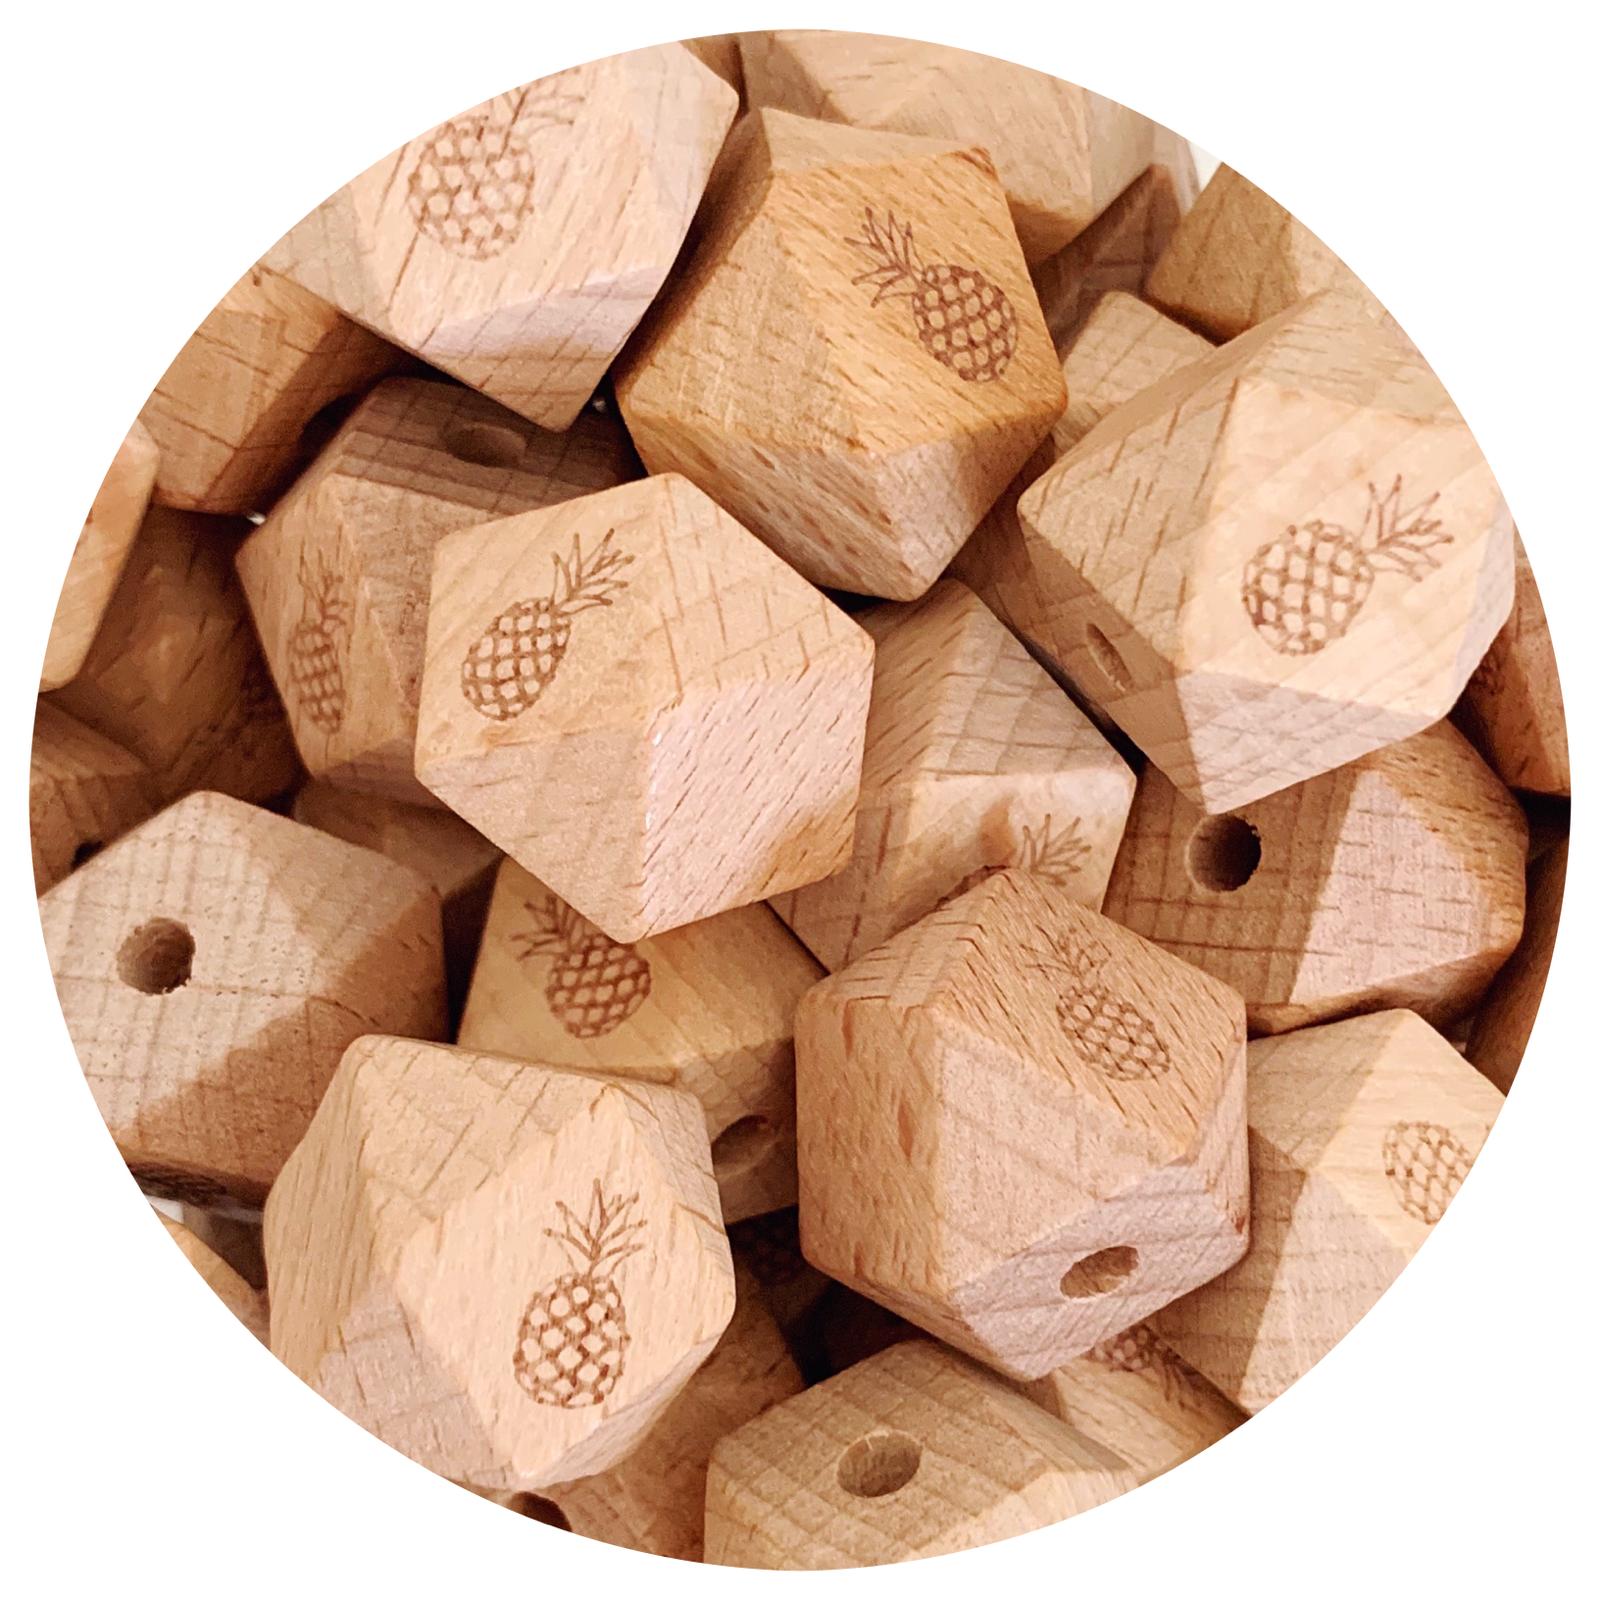 12mm Beech Wood Cube Letter Beads - MIXED PACK - 50 beads - AJ Craft  Supplies